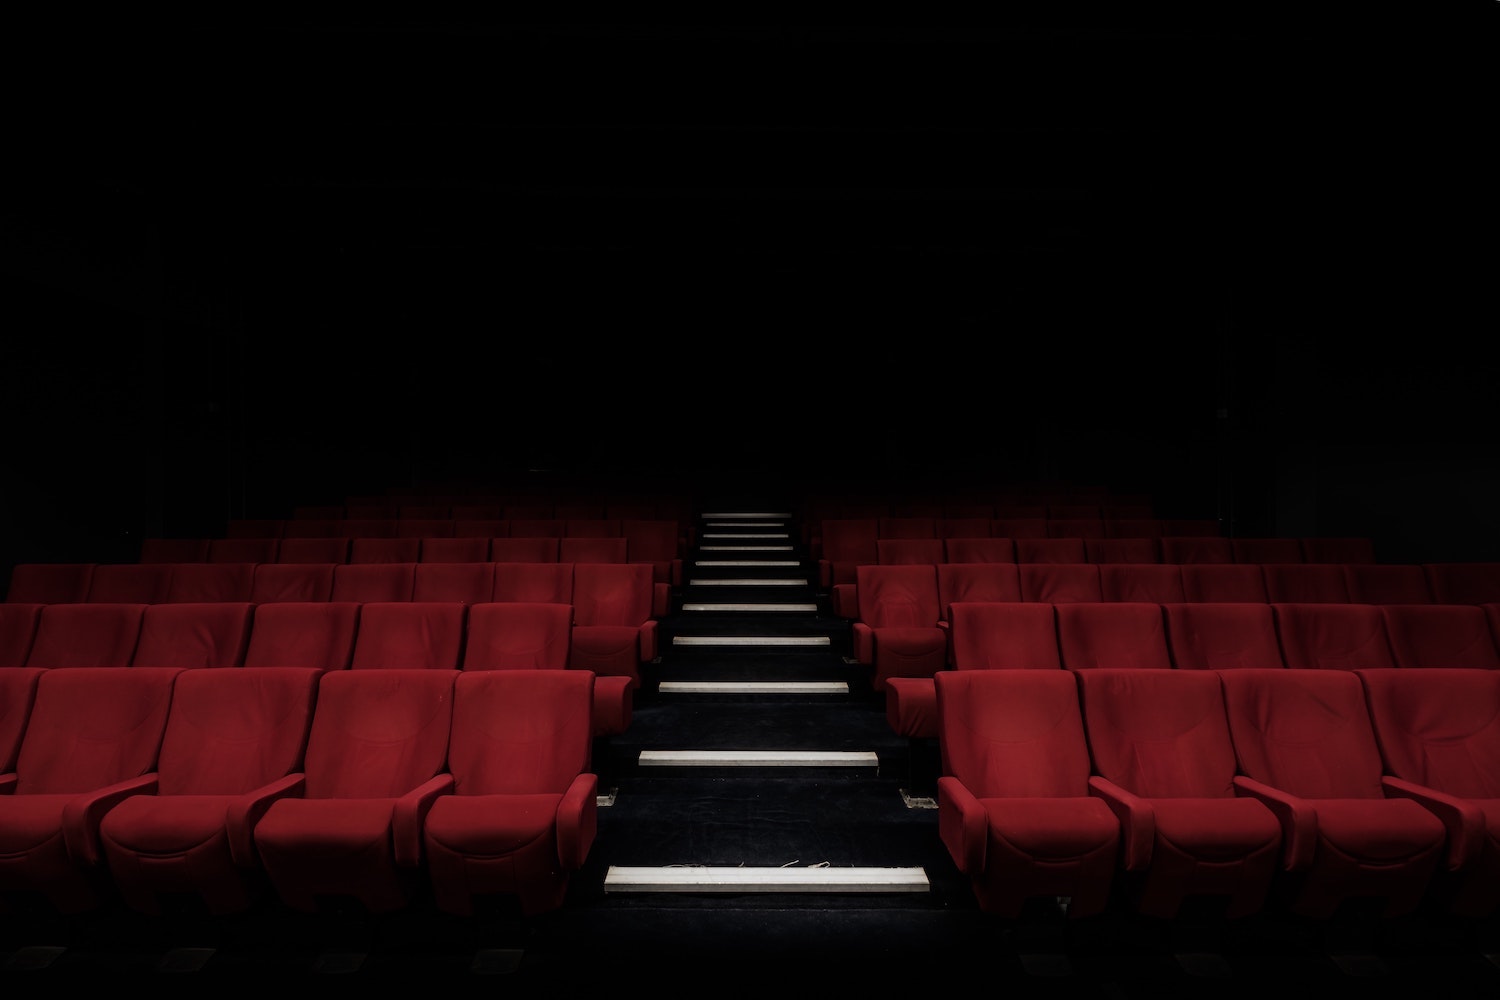 Movie theatre seats in the dark